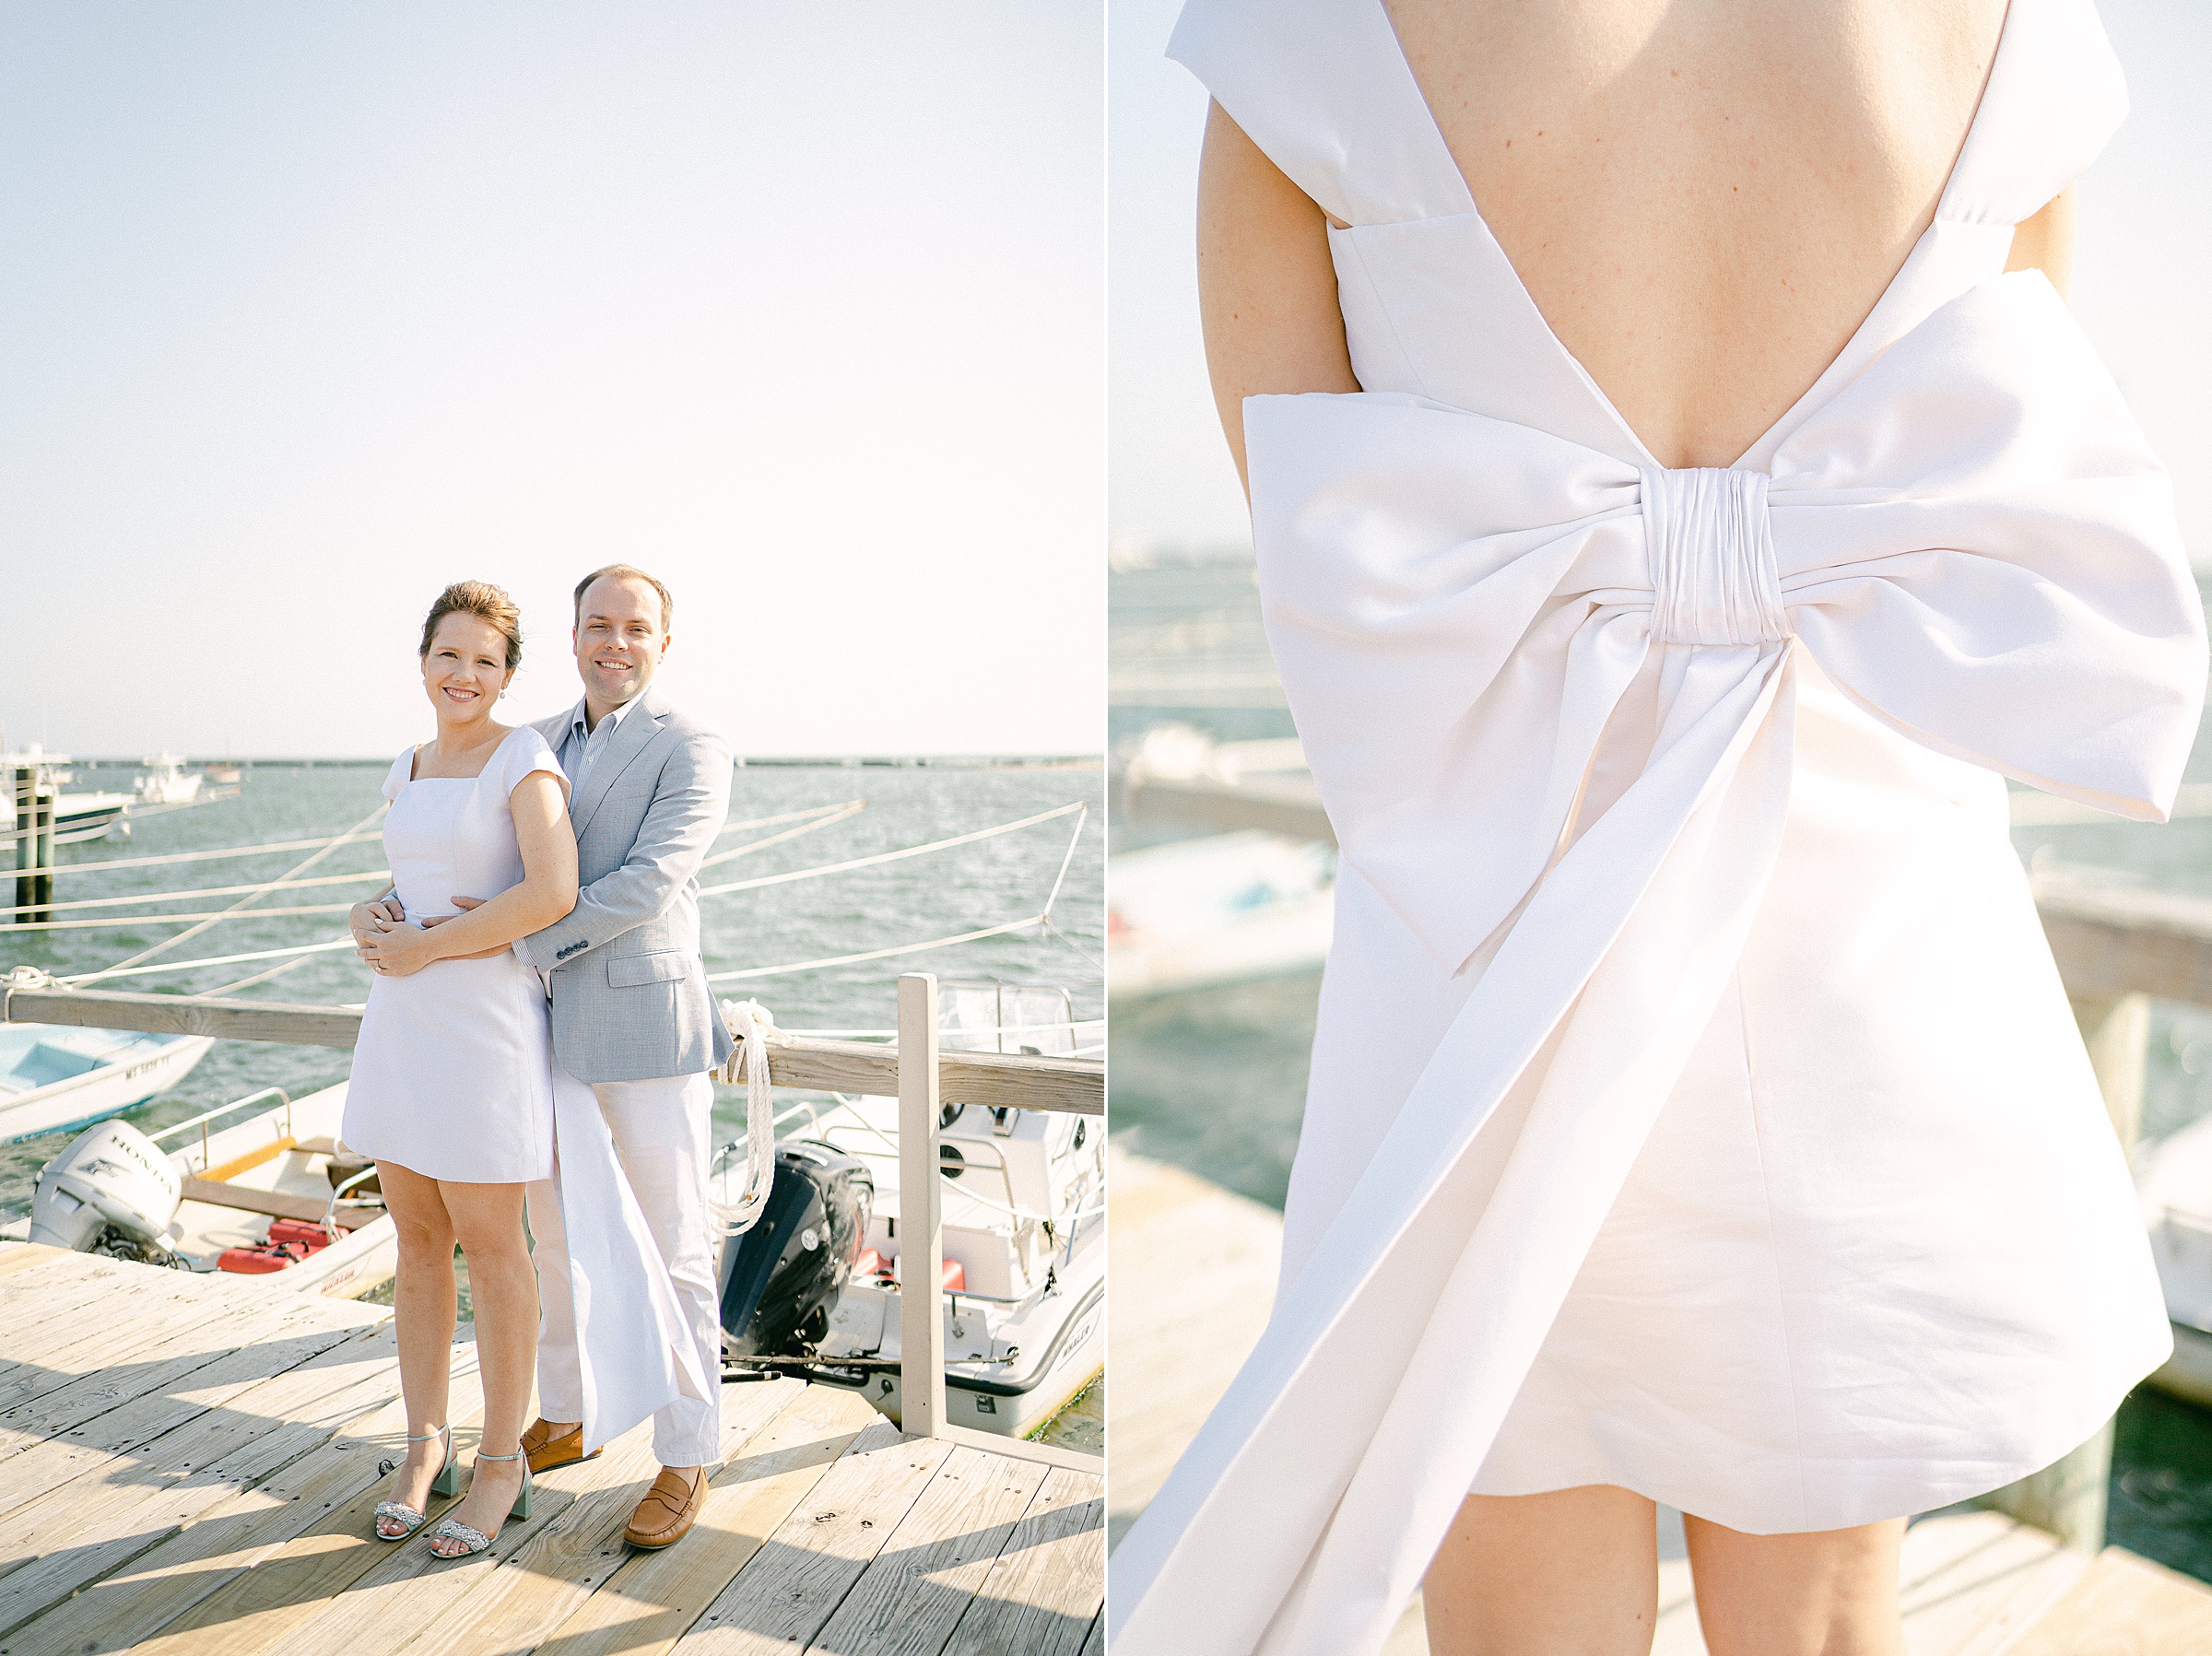 hyannis port yacht club cape cod bride and groom portraits before their wedding rehearsal